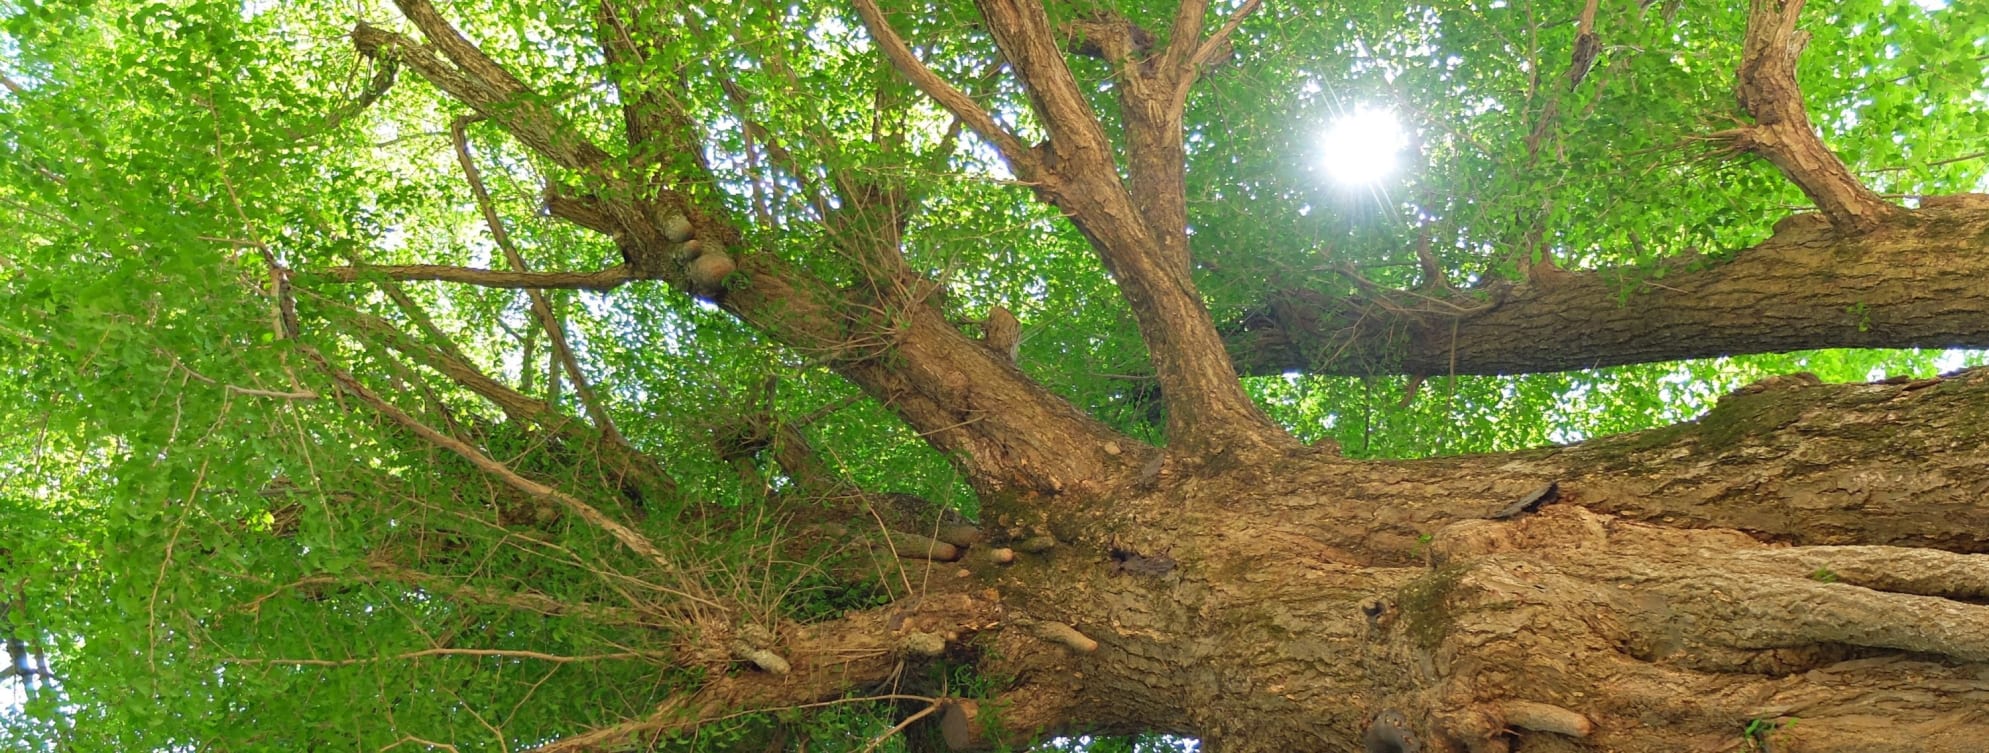 Photo of a Ginkgo biloba (Maidenhair tree)